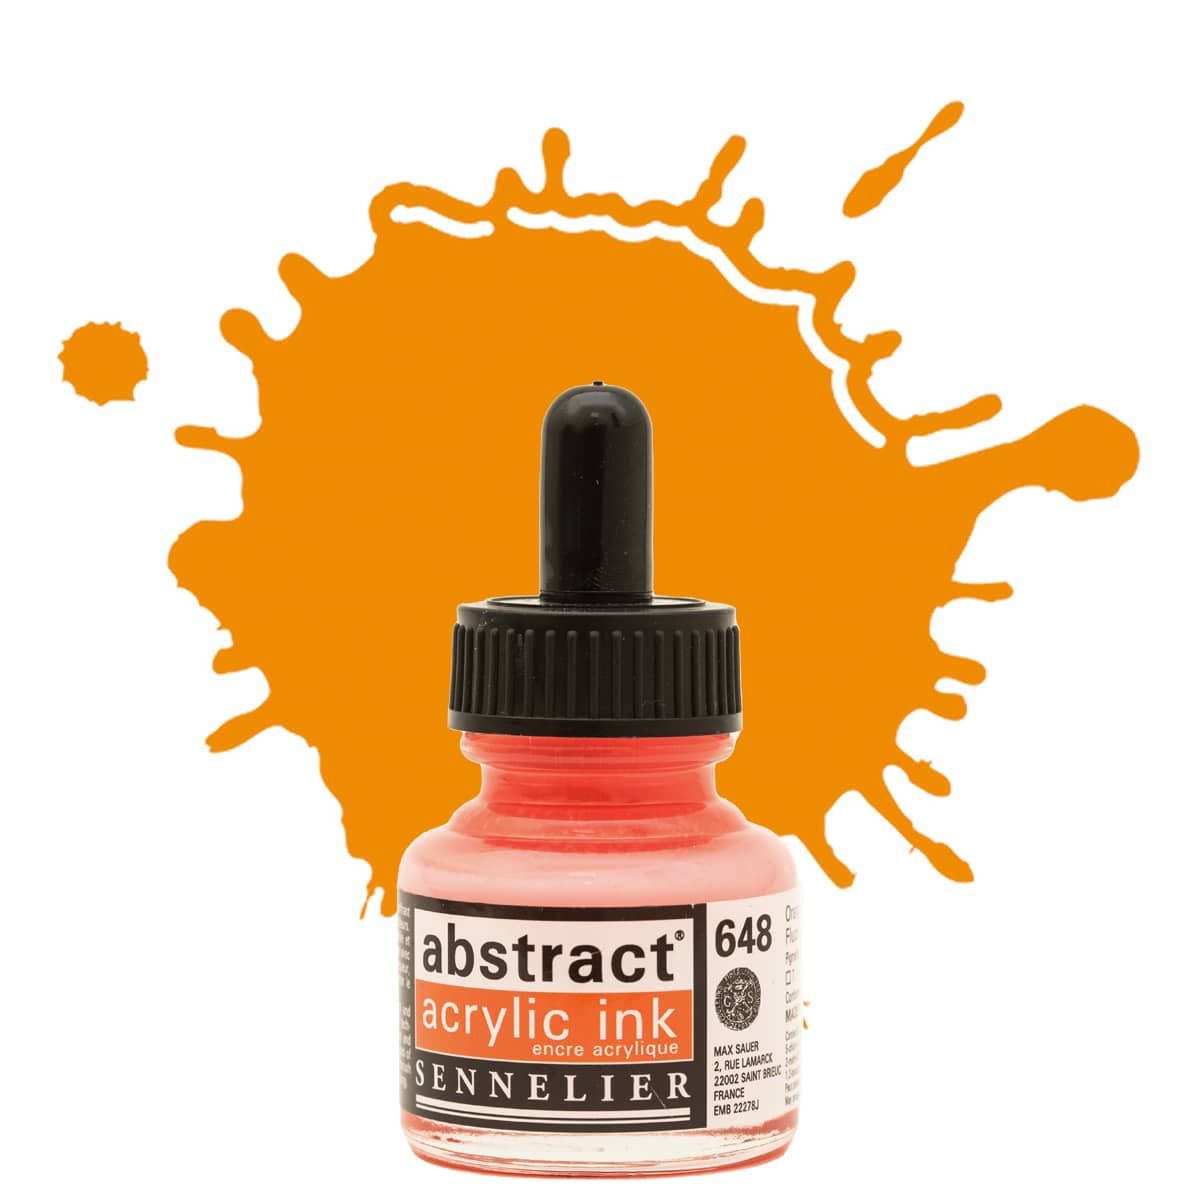 Sennelier Abstract Acrylic Ink - Fluorescent Orange, 30ml